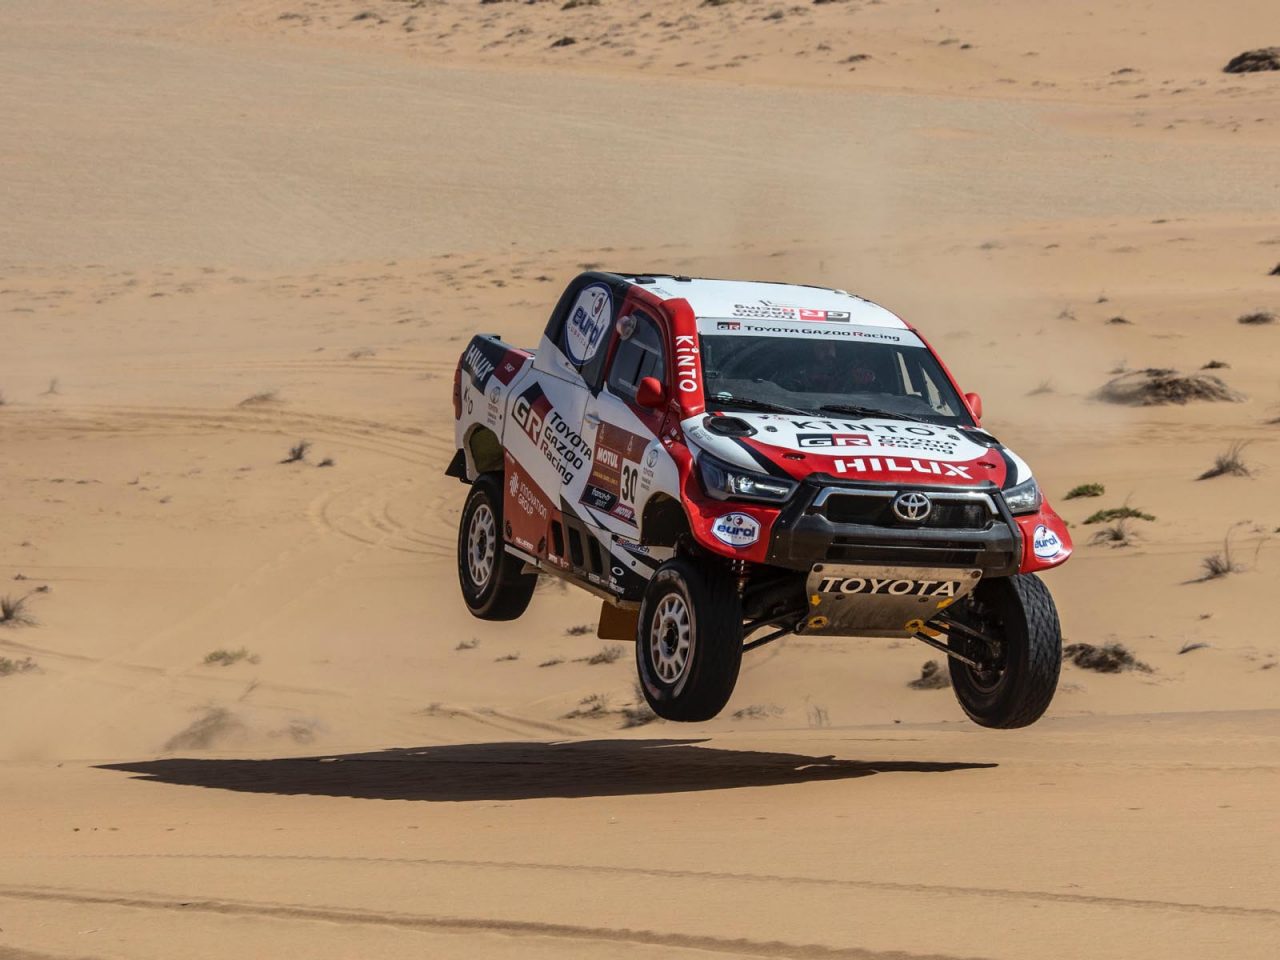 Rally car in the desert